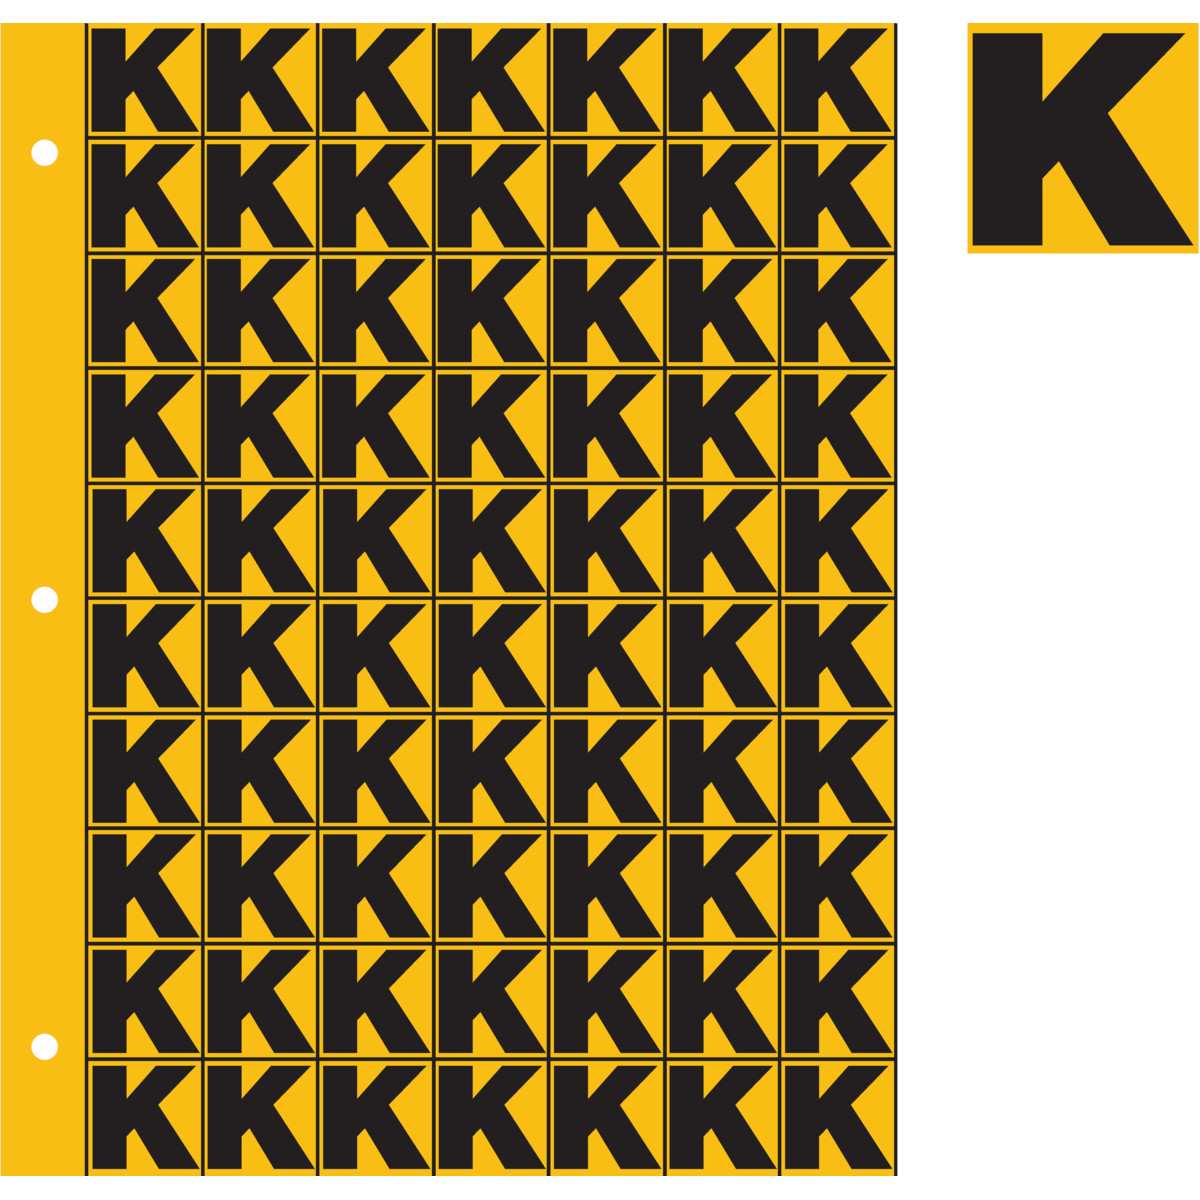 1" Black on Yellow Engineer Grade Reflective "K"